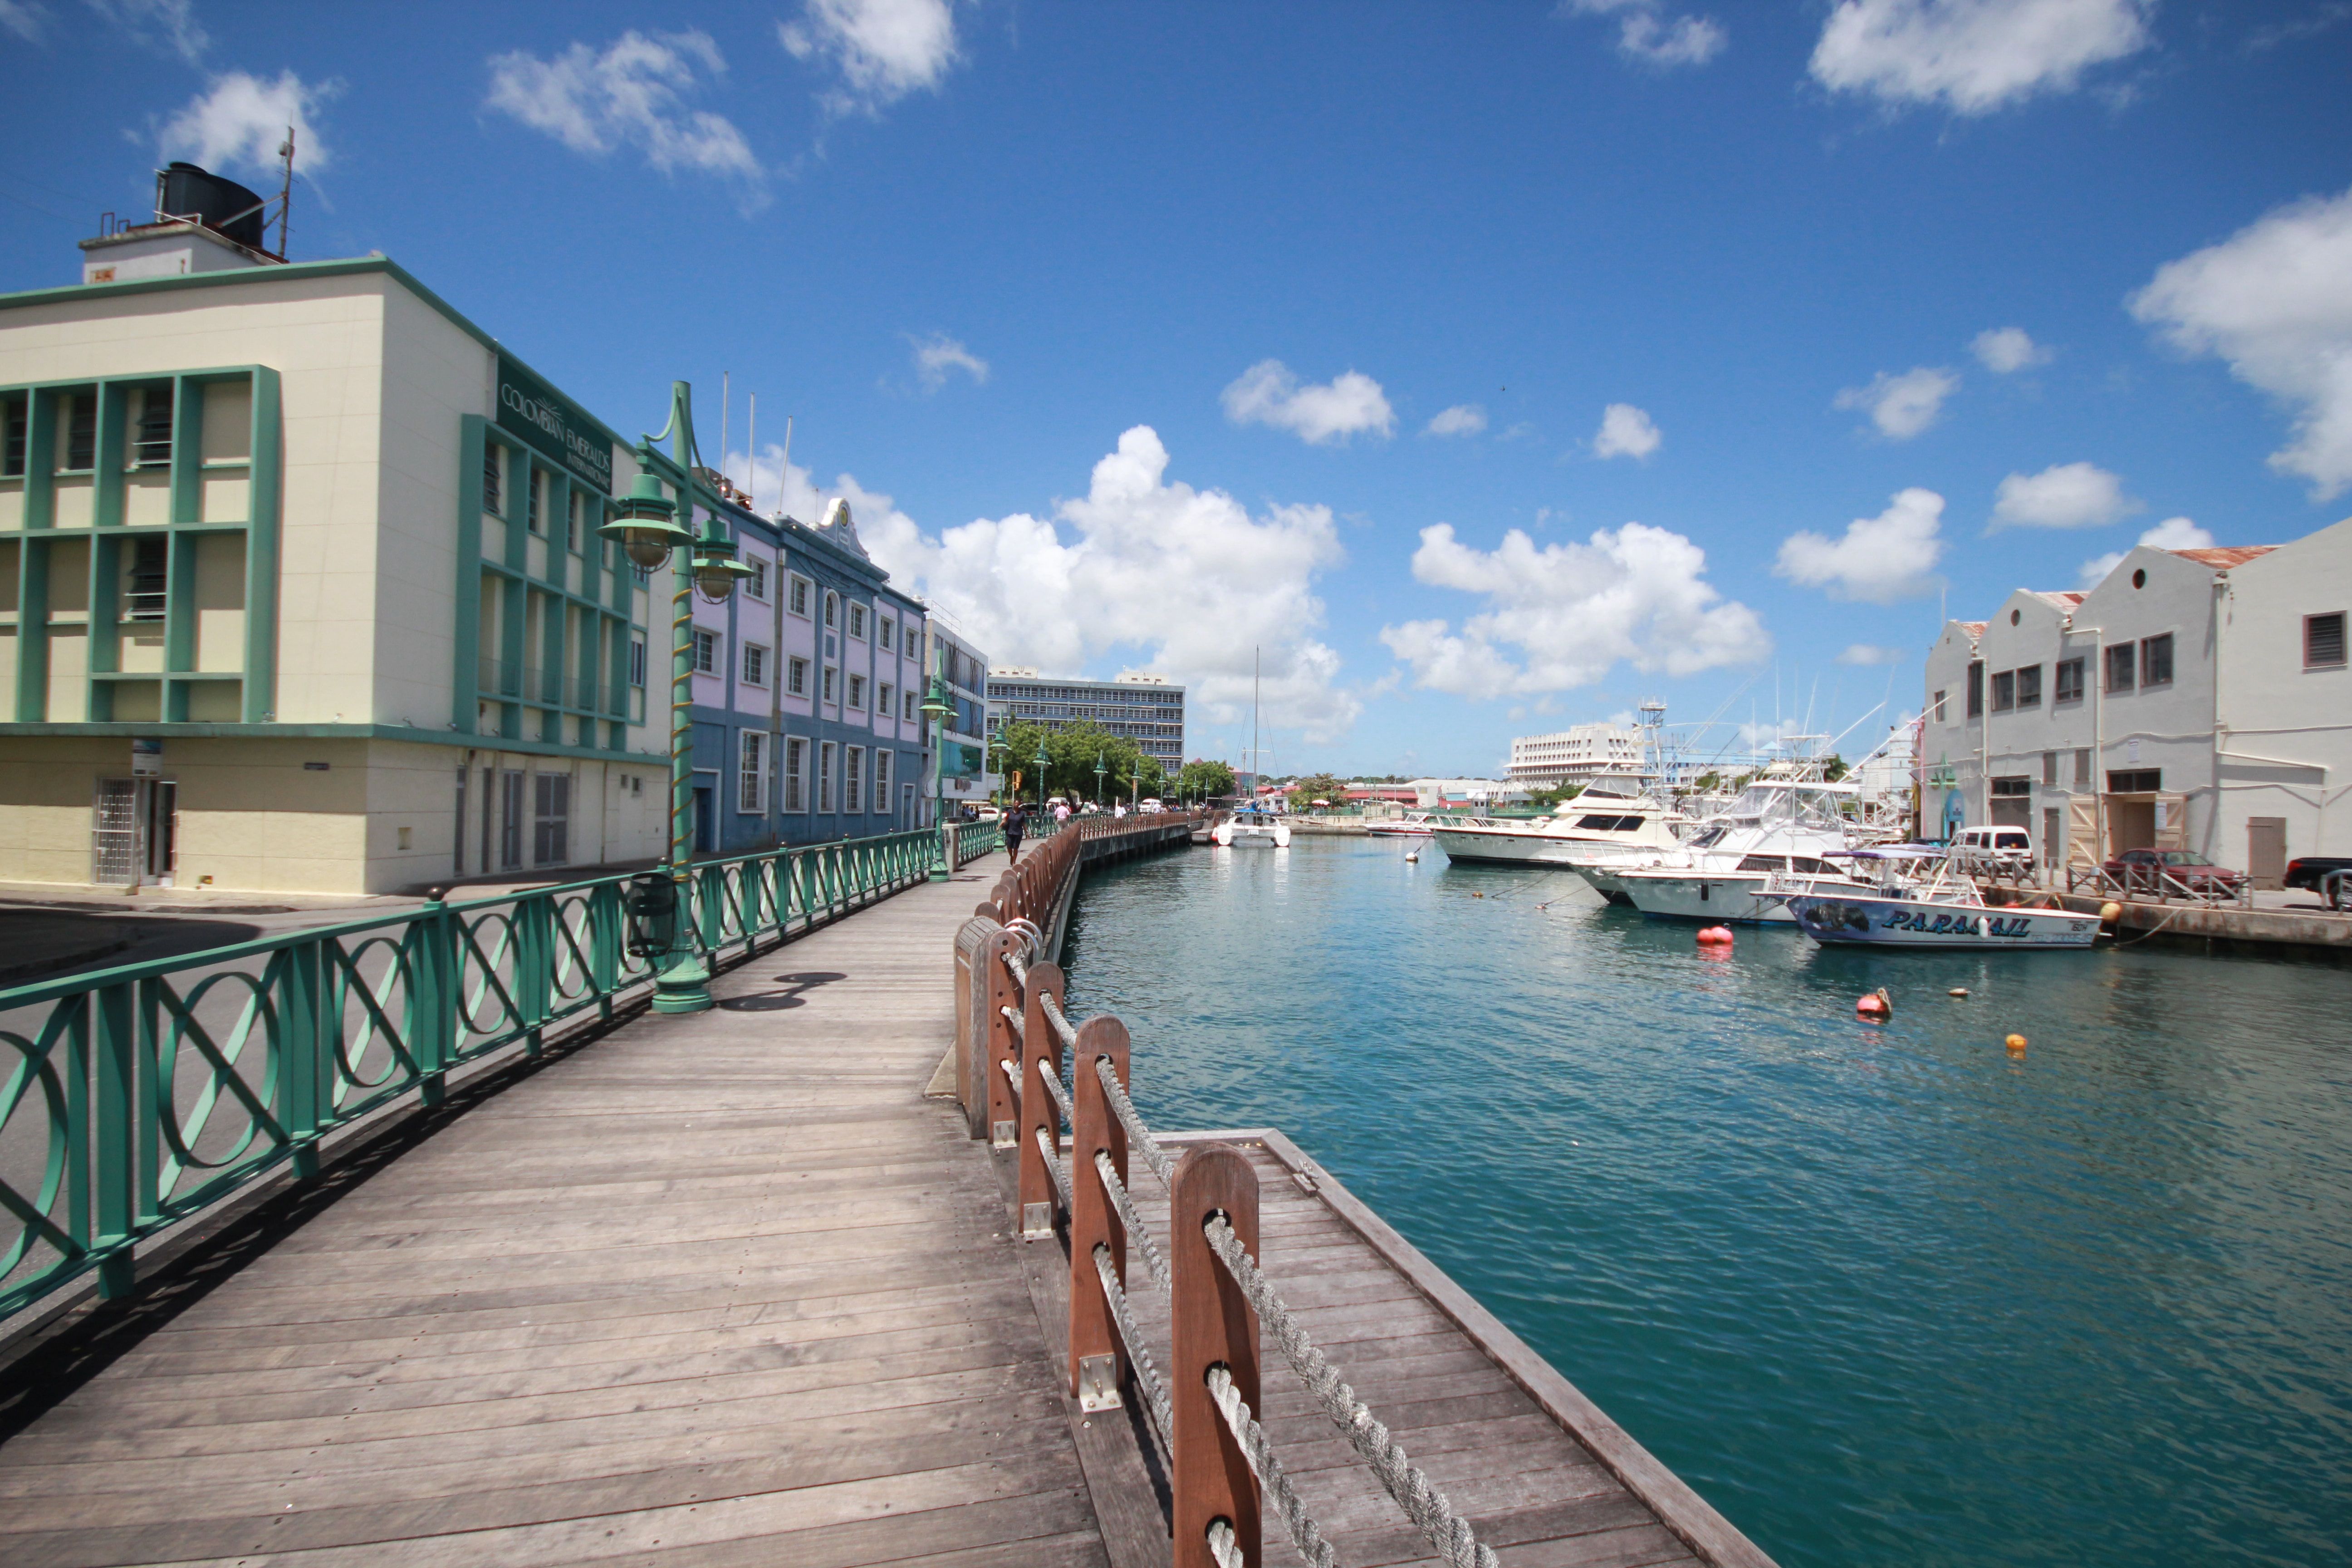 Dock in Key West, Florida, USA